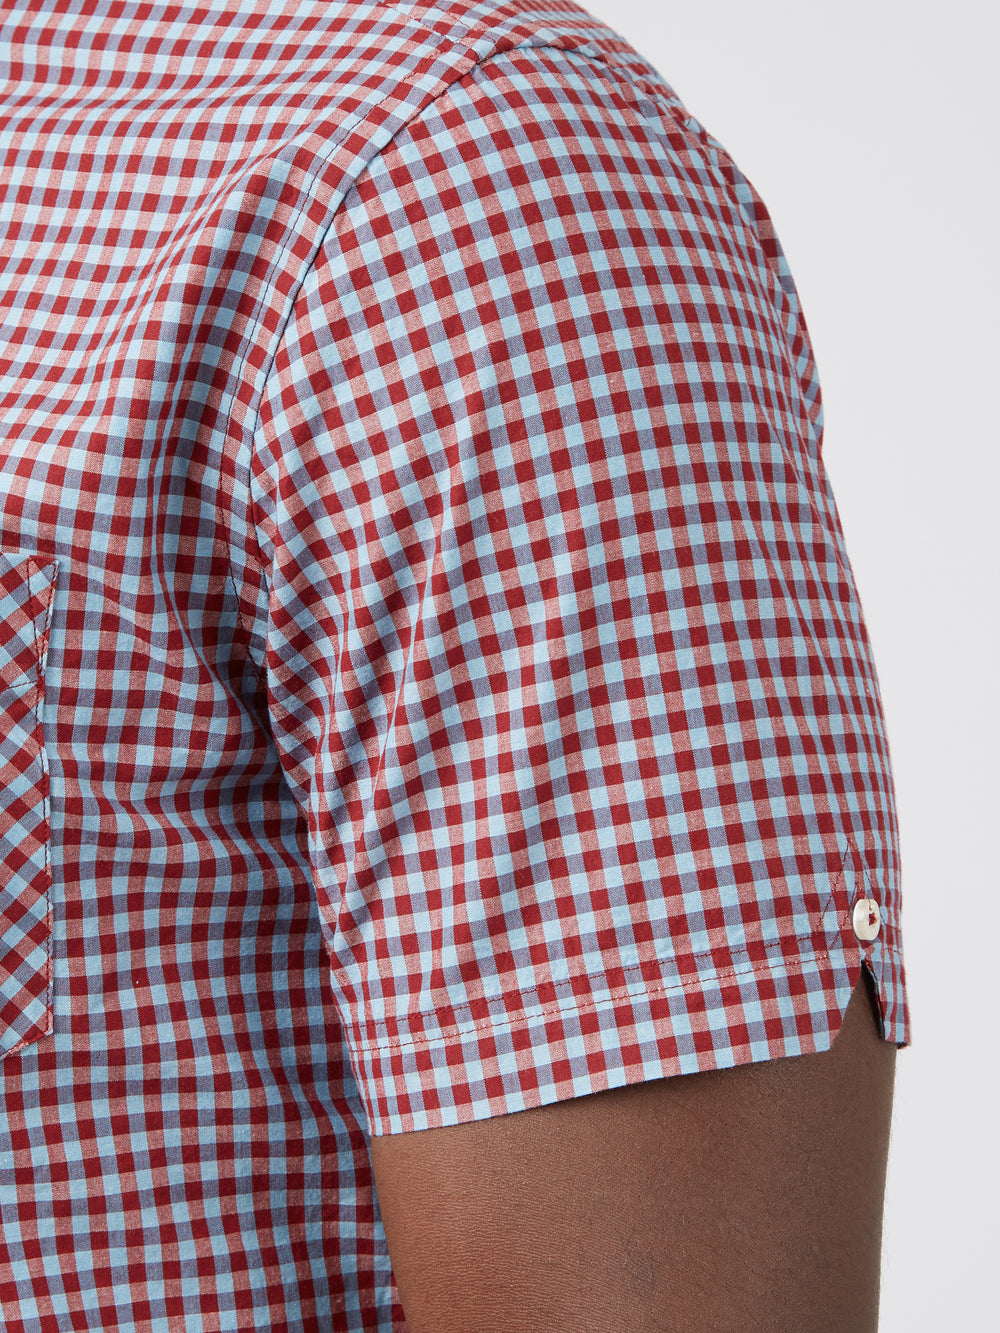 Signature Short-Sleeve Gingham Shirt - Claret